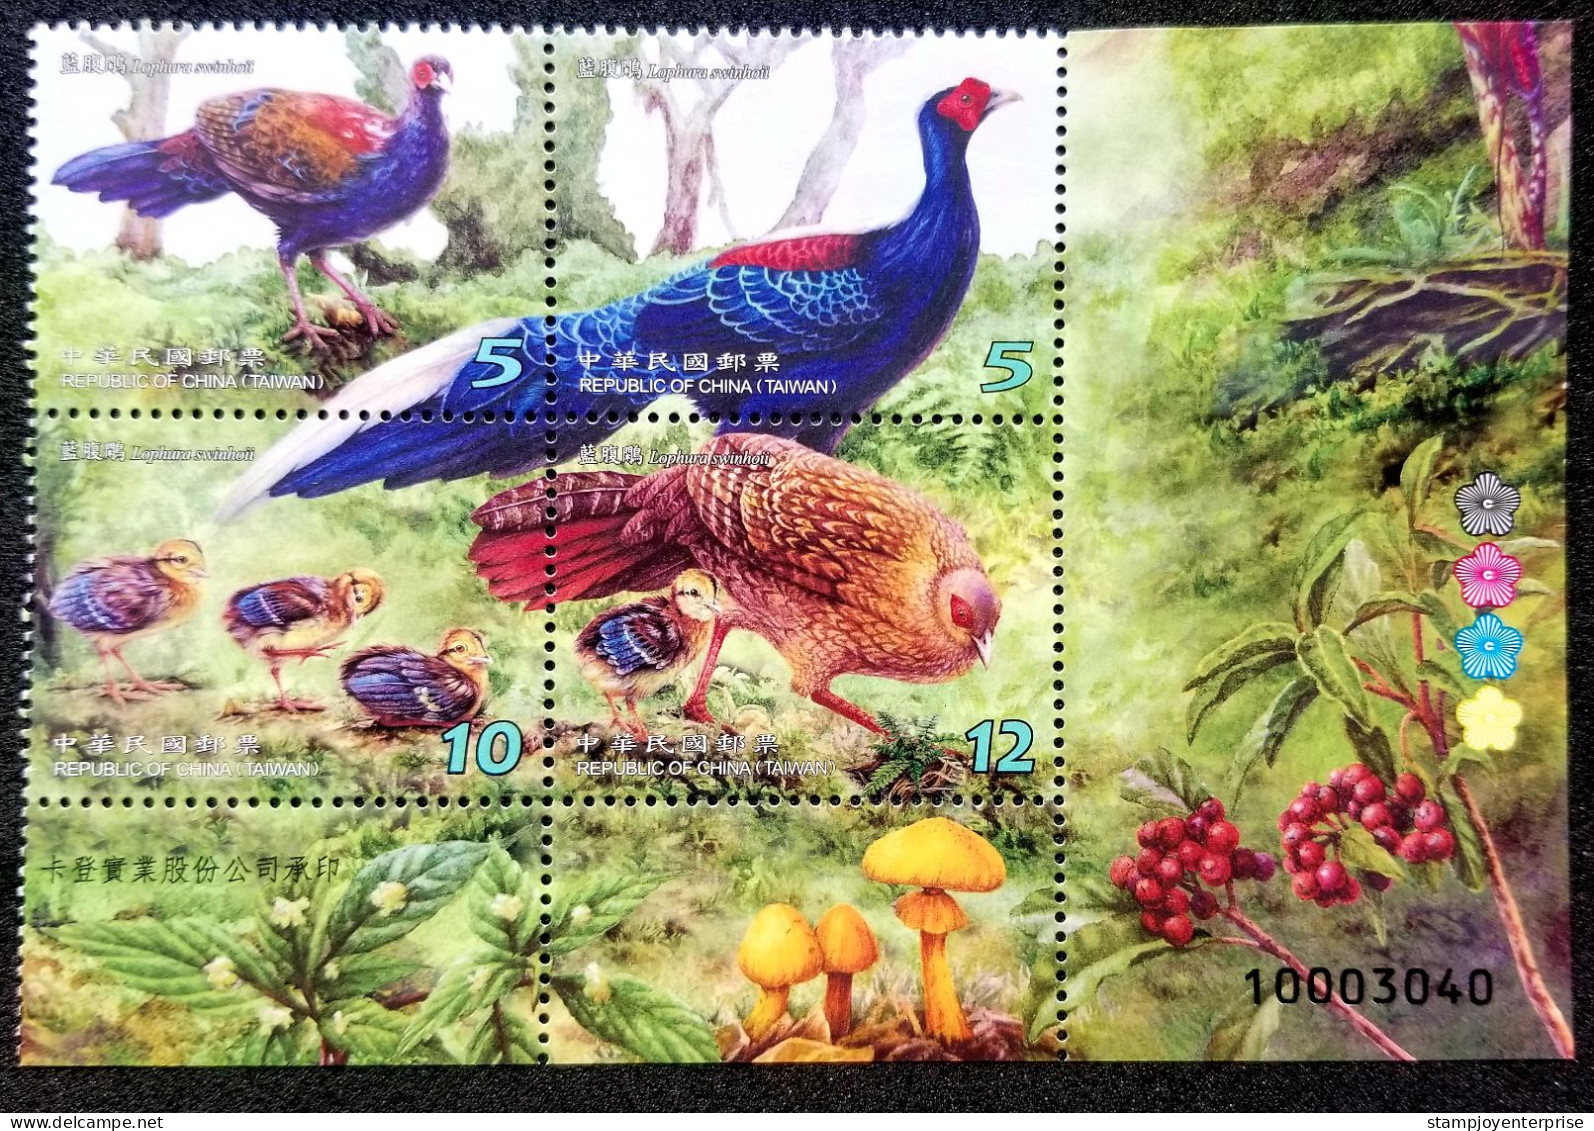 Taiwan Conservation Of Birds - Swinhoe's Pheasant 2014 Fauna Wildlife Bird Mushroom Fern (stamp Color Code) MNH - Unused Stamps